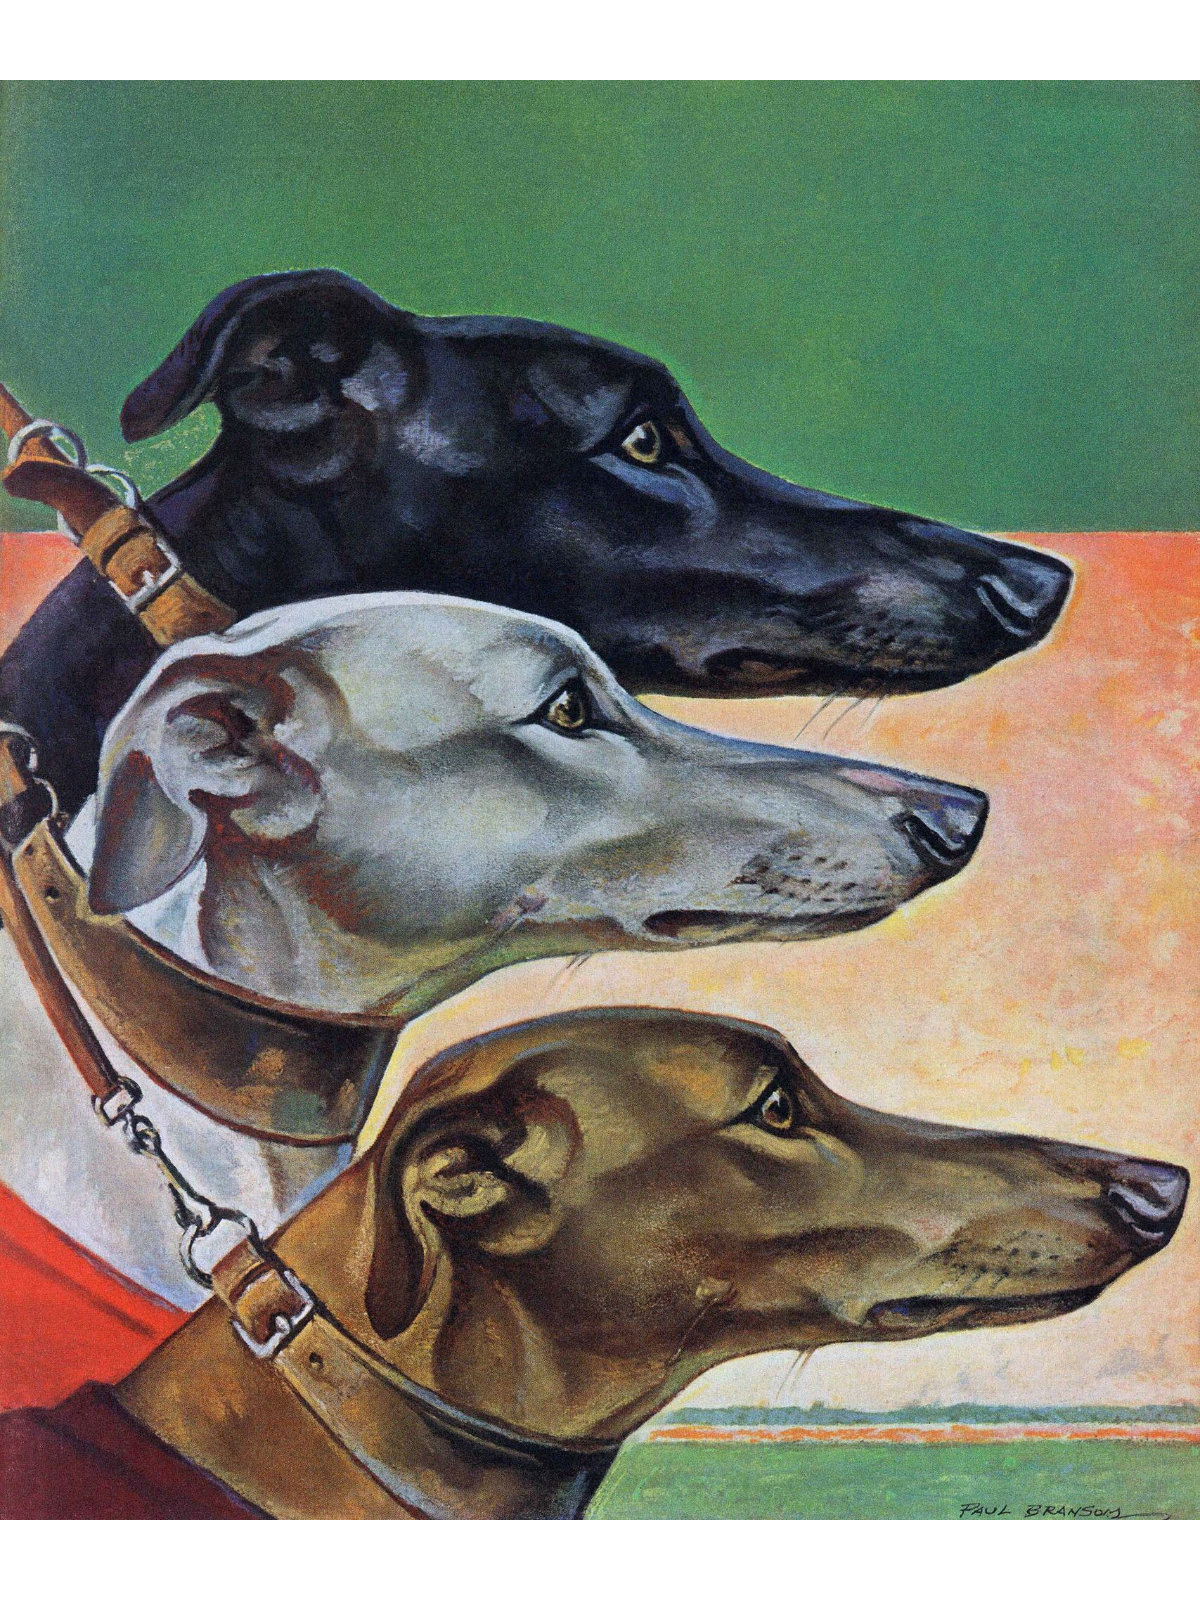 Постер собаки. Постеры с собаками. Советские плакаты с собаками. Ретро постеры с собаками. Ретро плакаты собака.